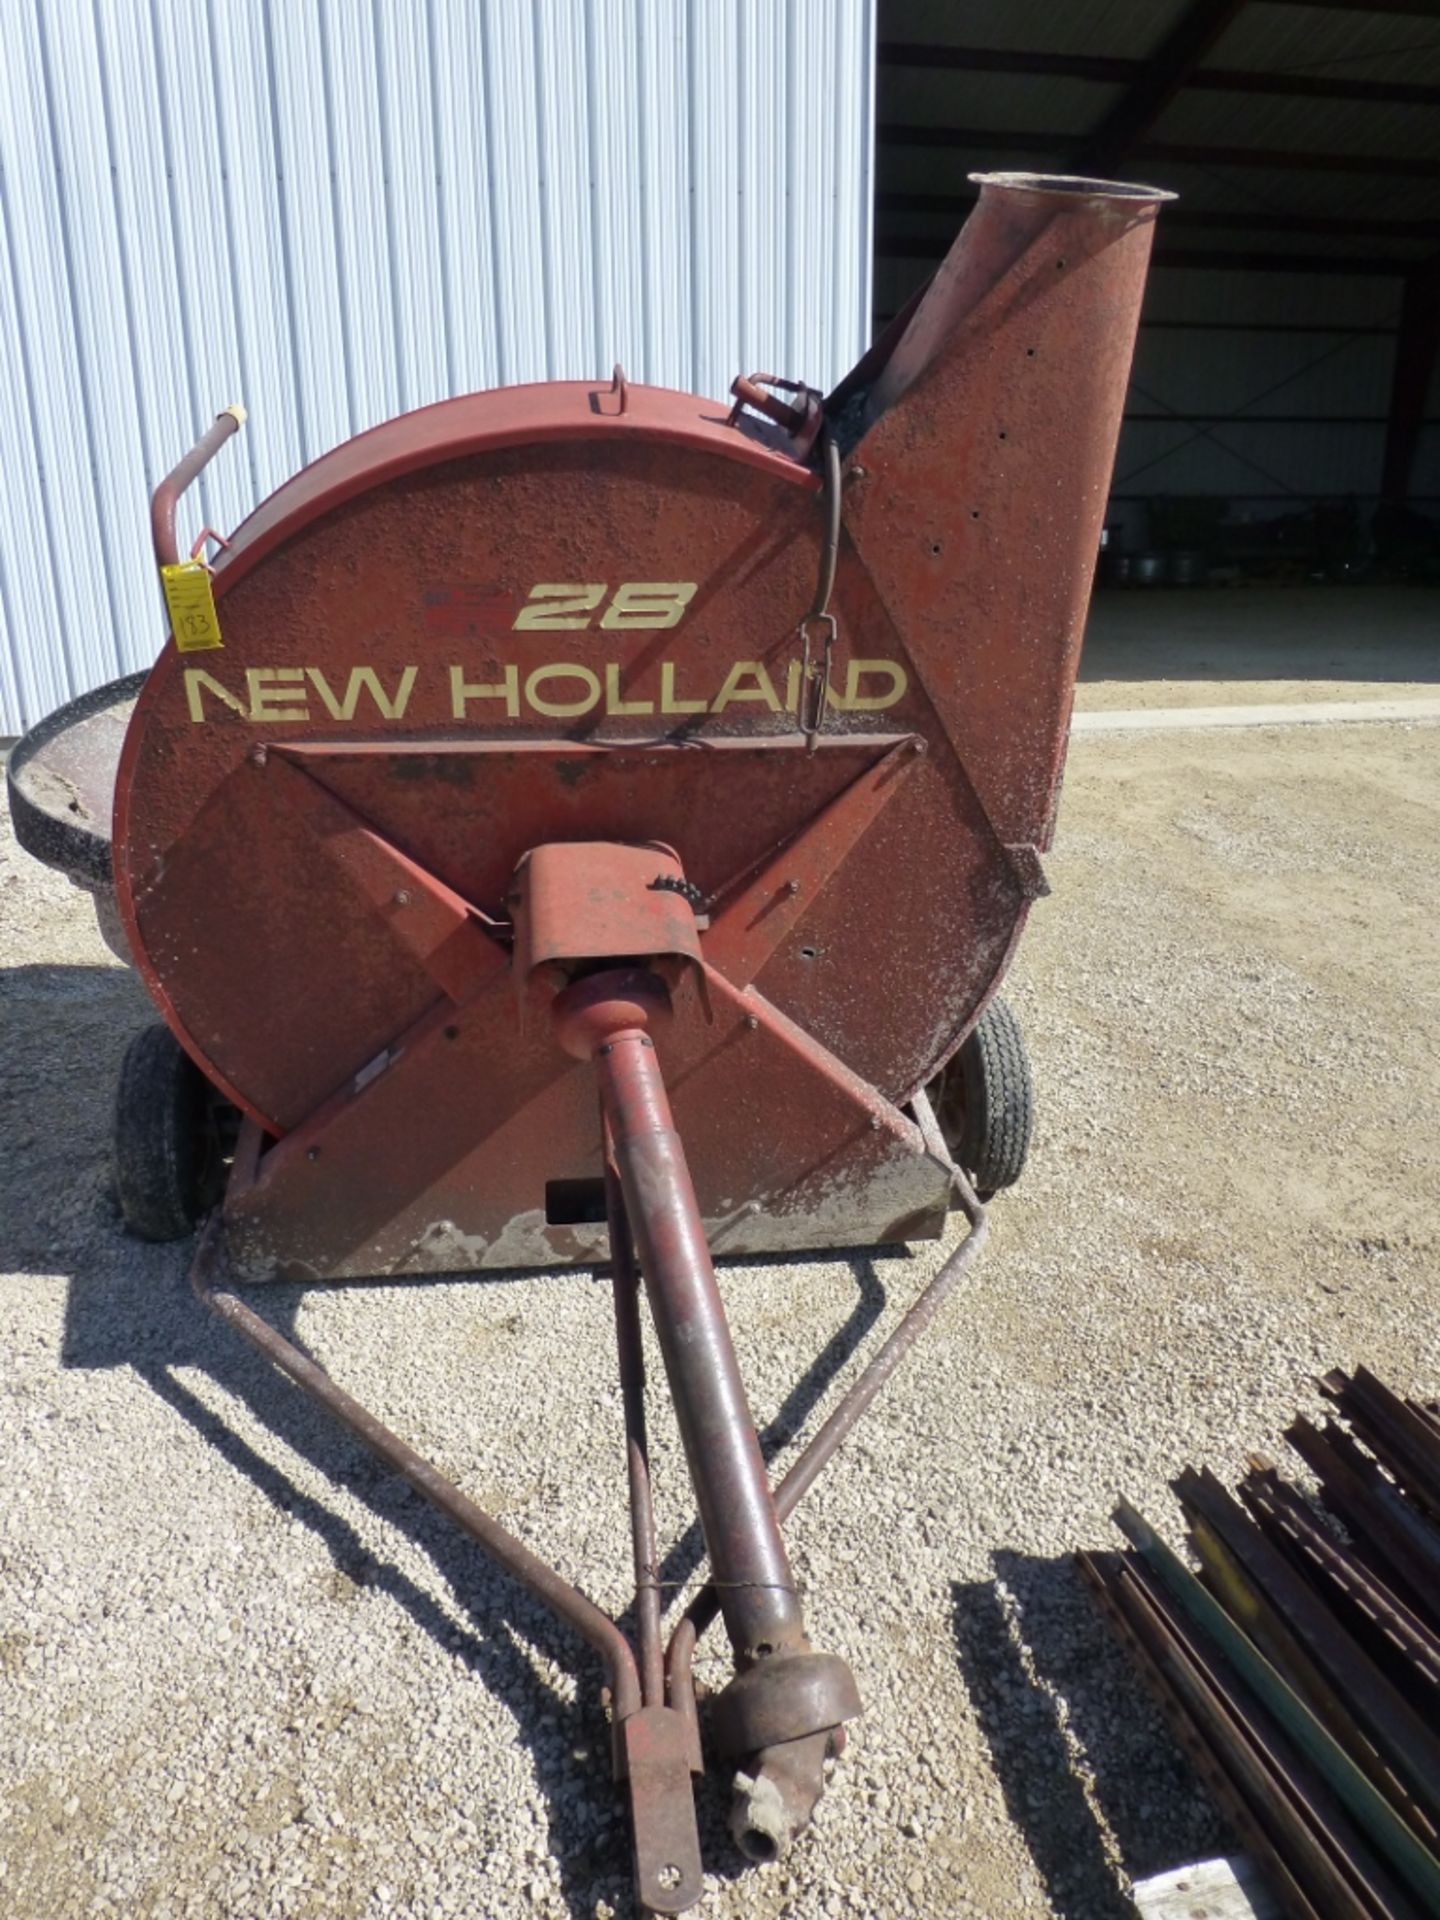 New Holland 28 blower